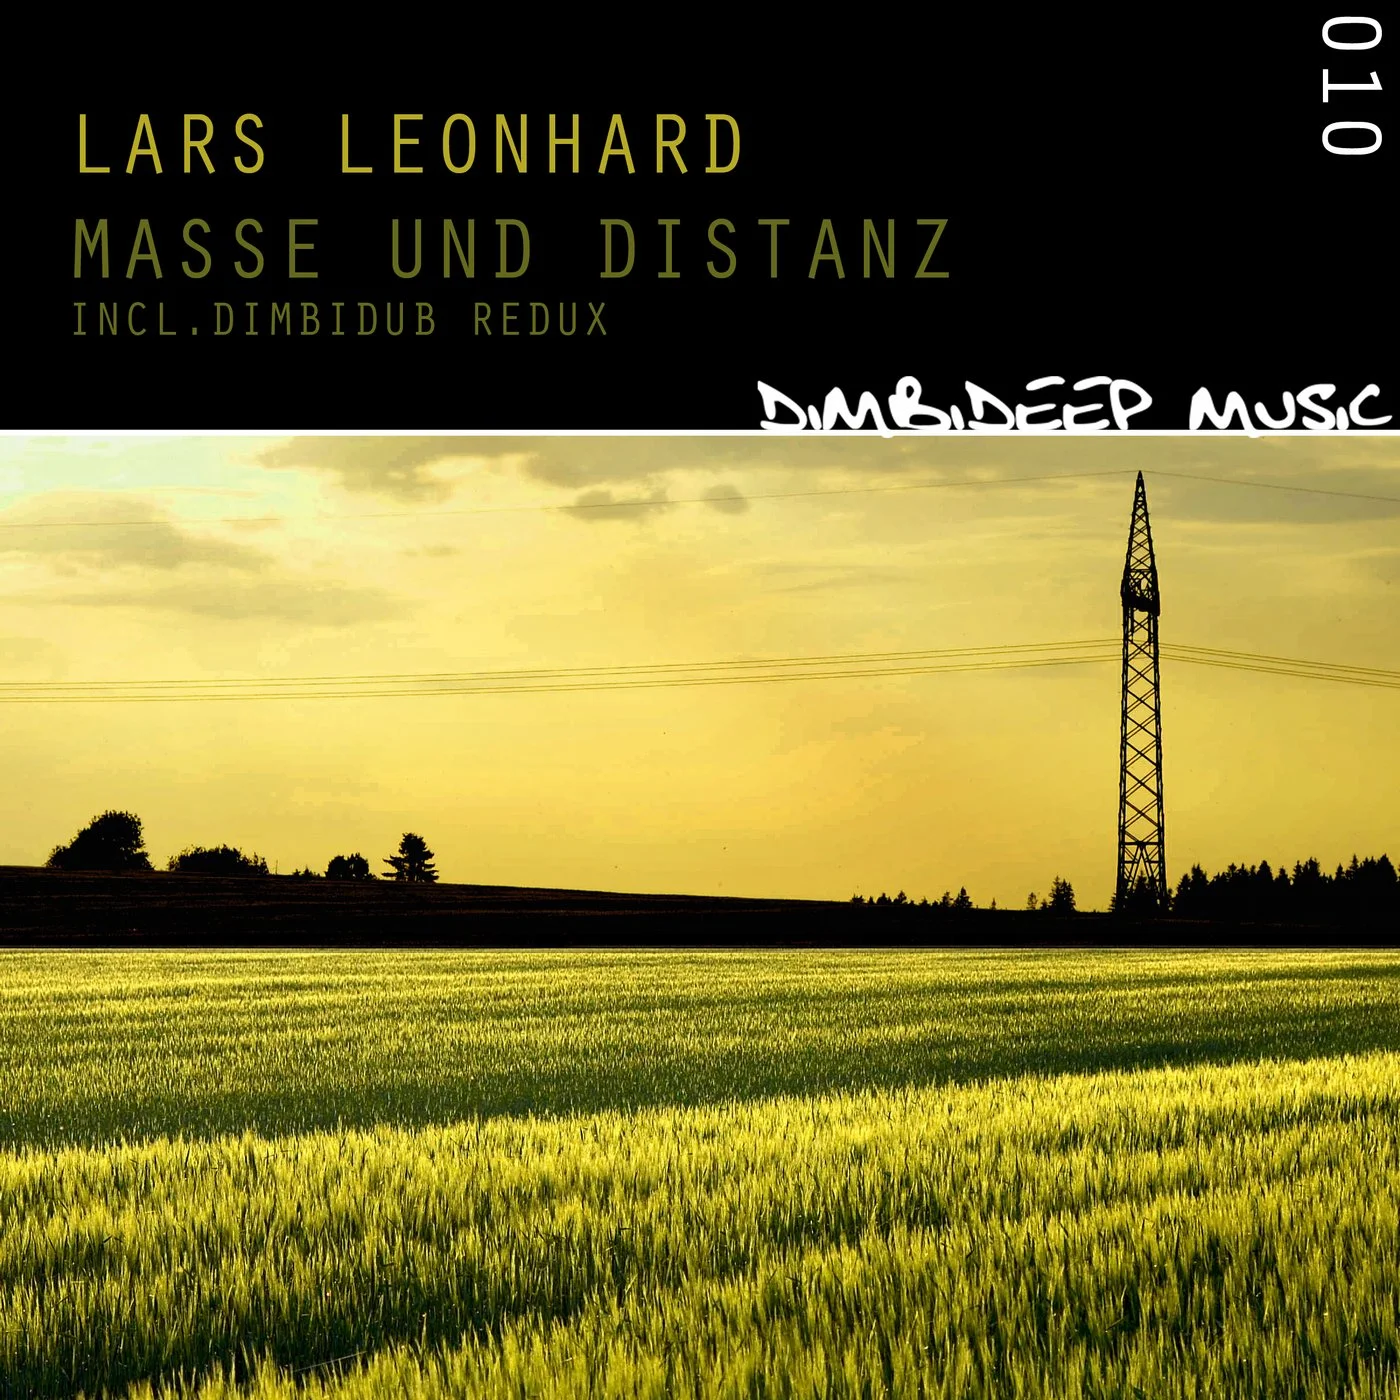 Lars Leonhard - Supererde (Original Mix)